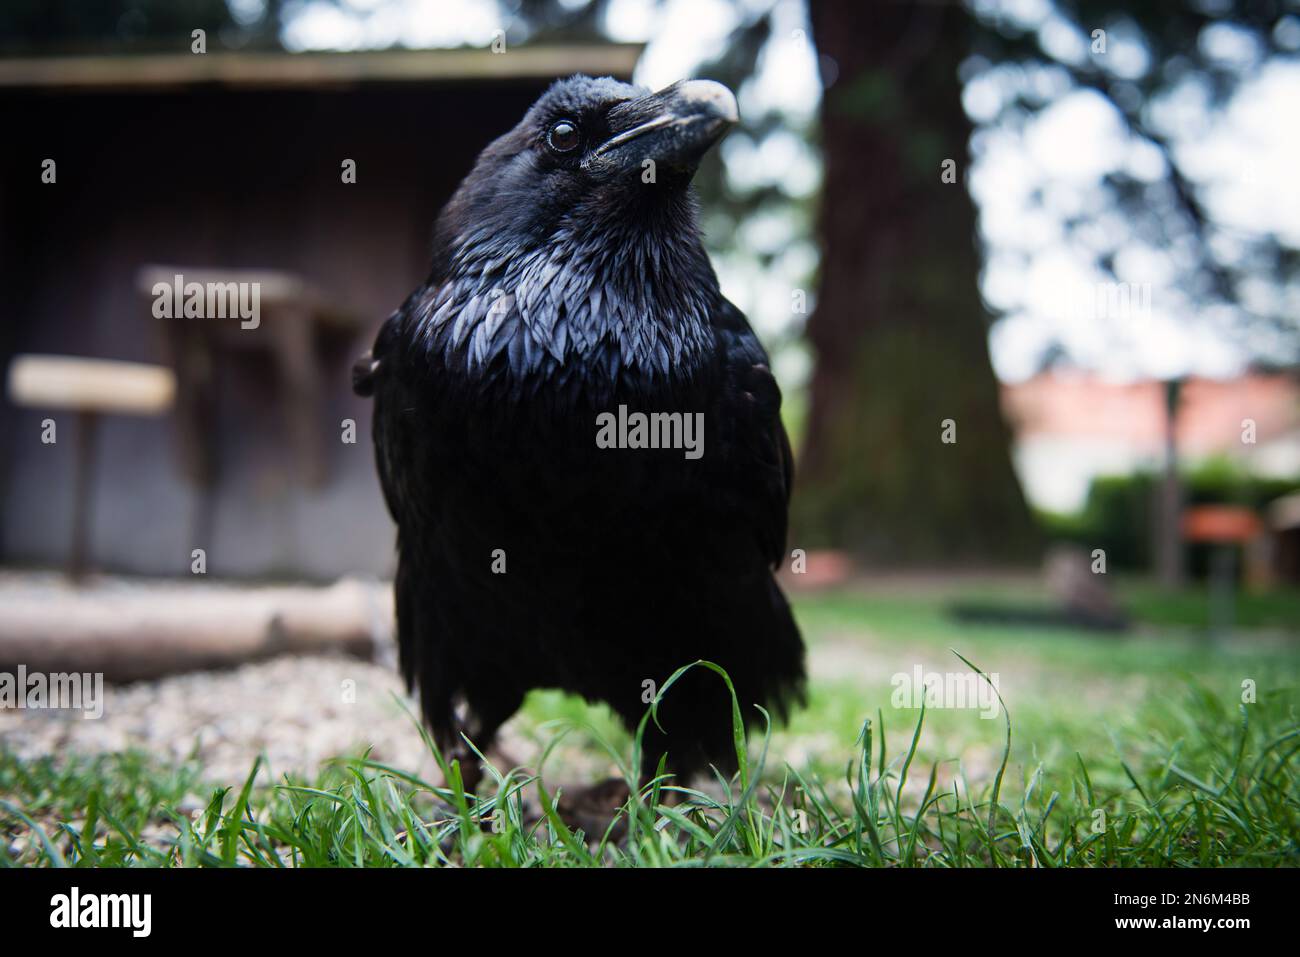 Black raven standing on ground Stock Photo